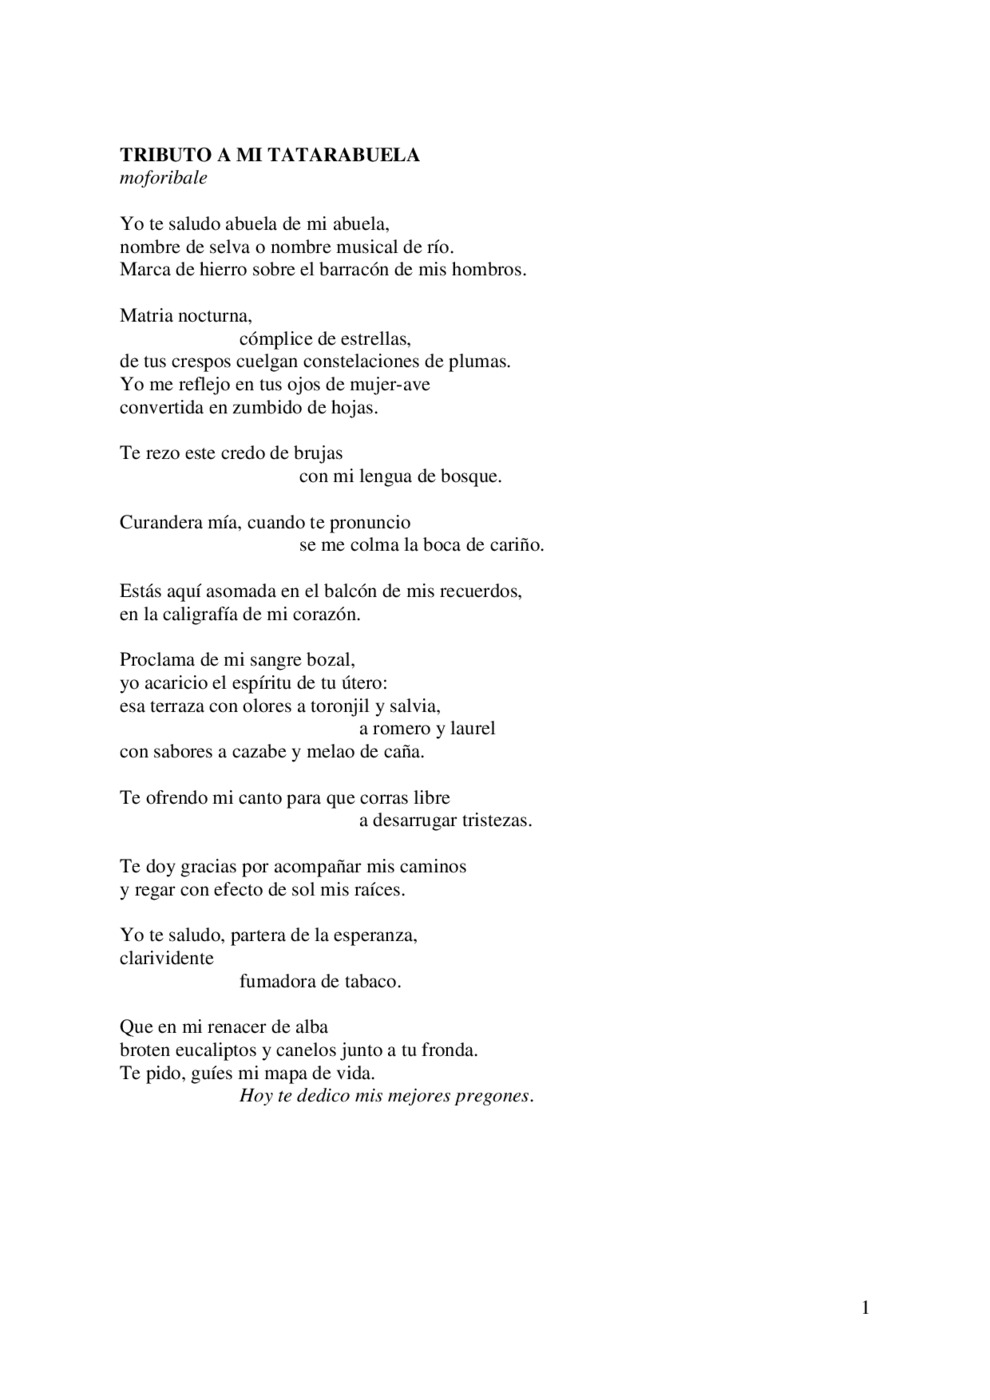 Spanish text of the poem TRIBUTO A MI TATARABUELA